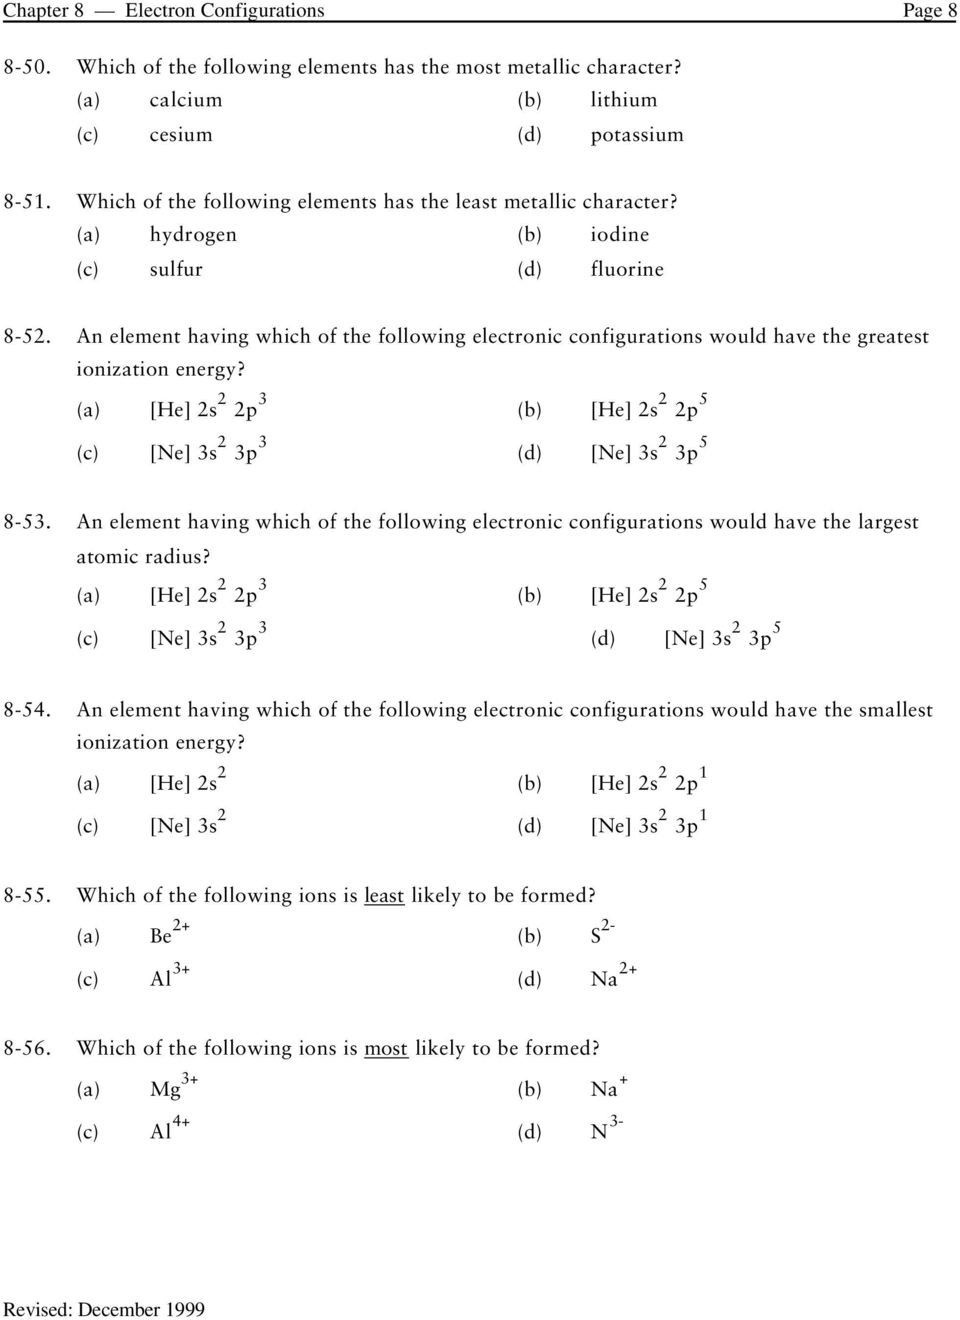 Electron Configuration Worksheet Answers Key Chapter 8 Atomic 